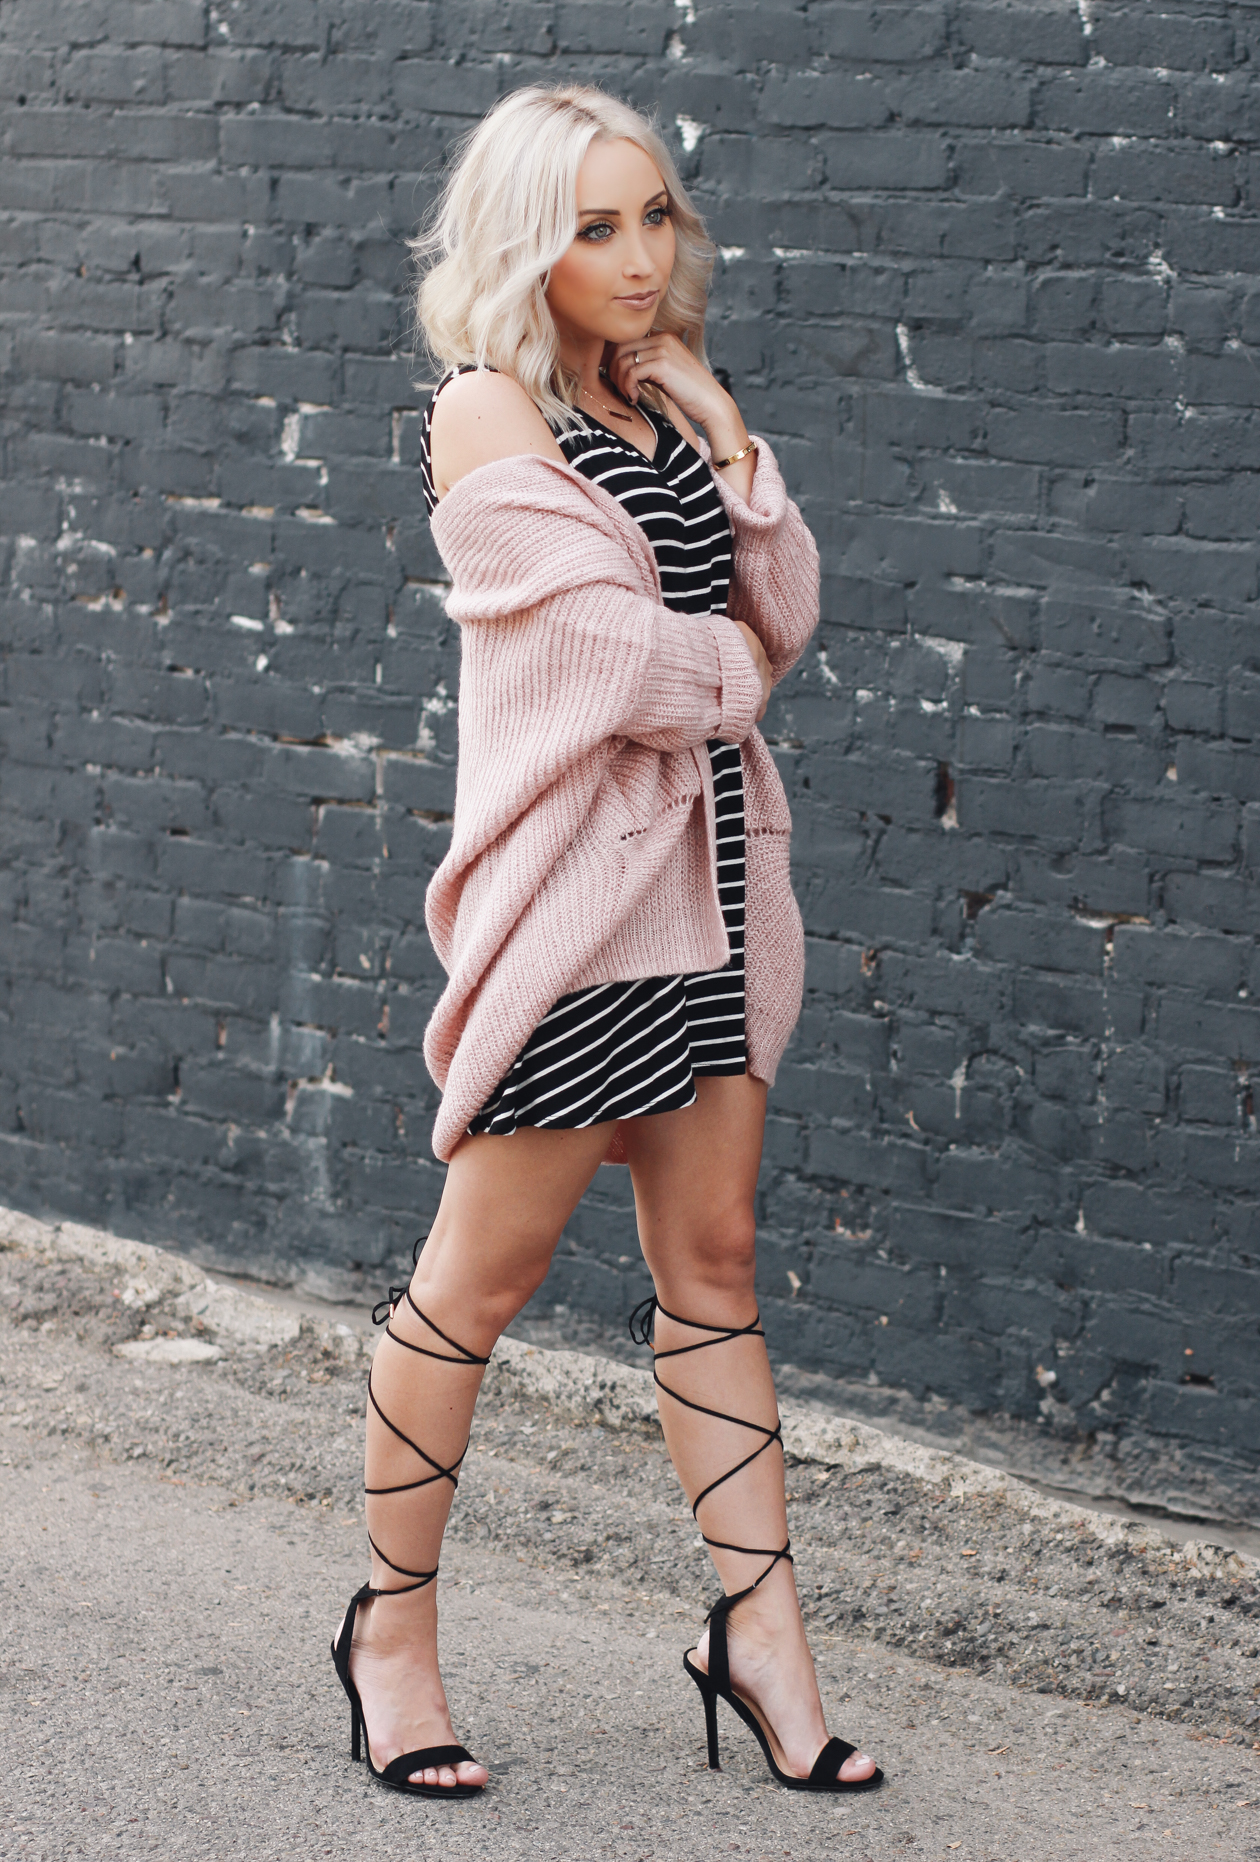 Striped Dress + Lace Up Heels | StyledByBlondie.com